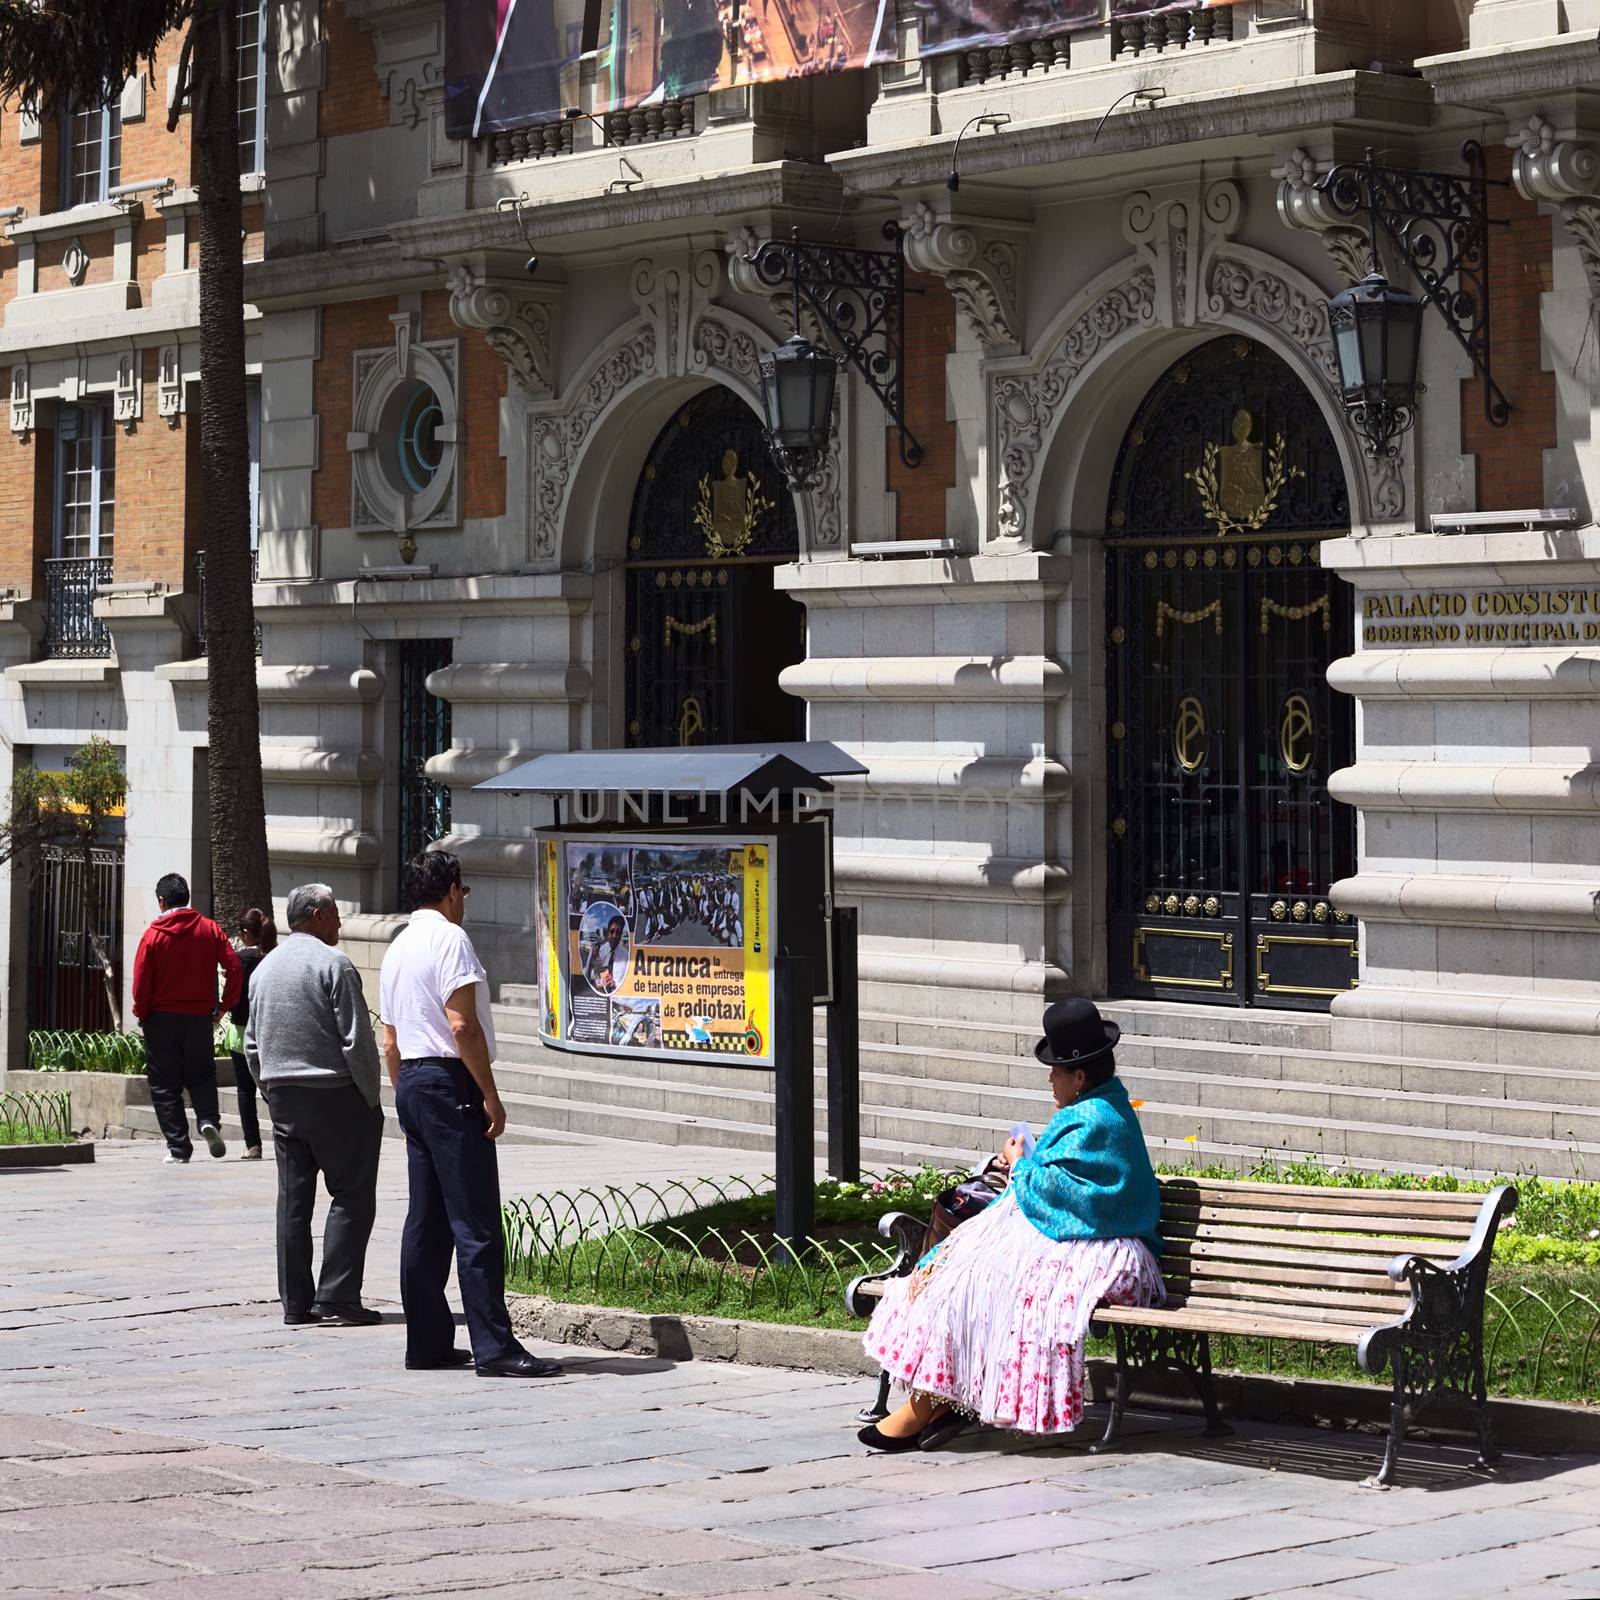 LA PAZ, BOLIVIA - OCTOBER 11, 2014: Unidentified people in front of the entrance of the Palacio Consistorial Gobierno Municipal de La Paz (city hall) on Mercado street in the city center on October 11, 2014 in La Paz, Bolivia